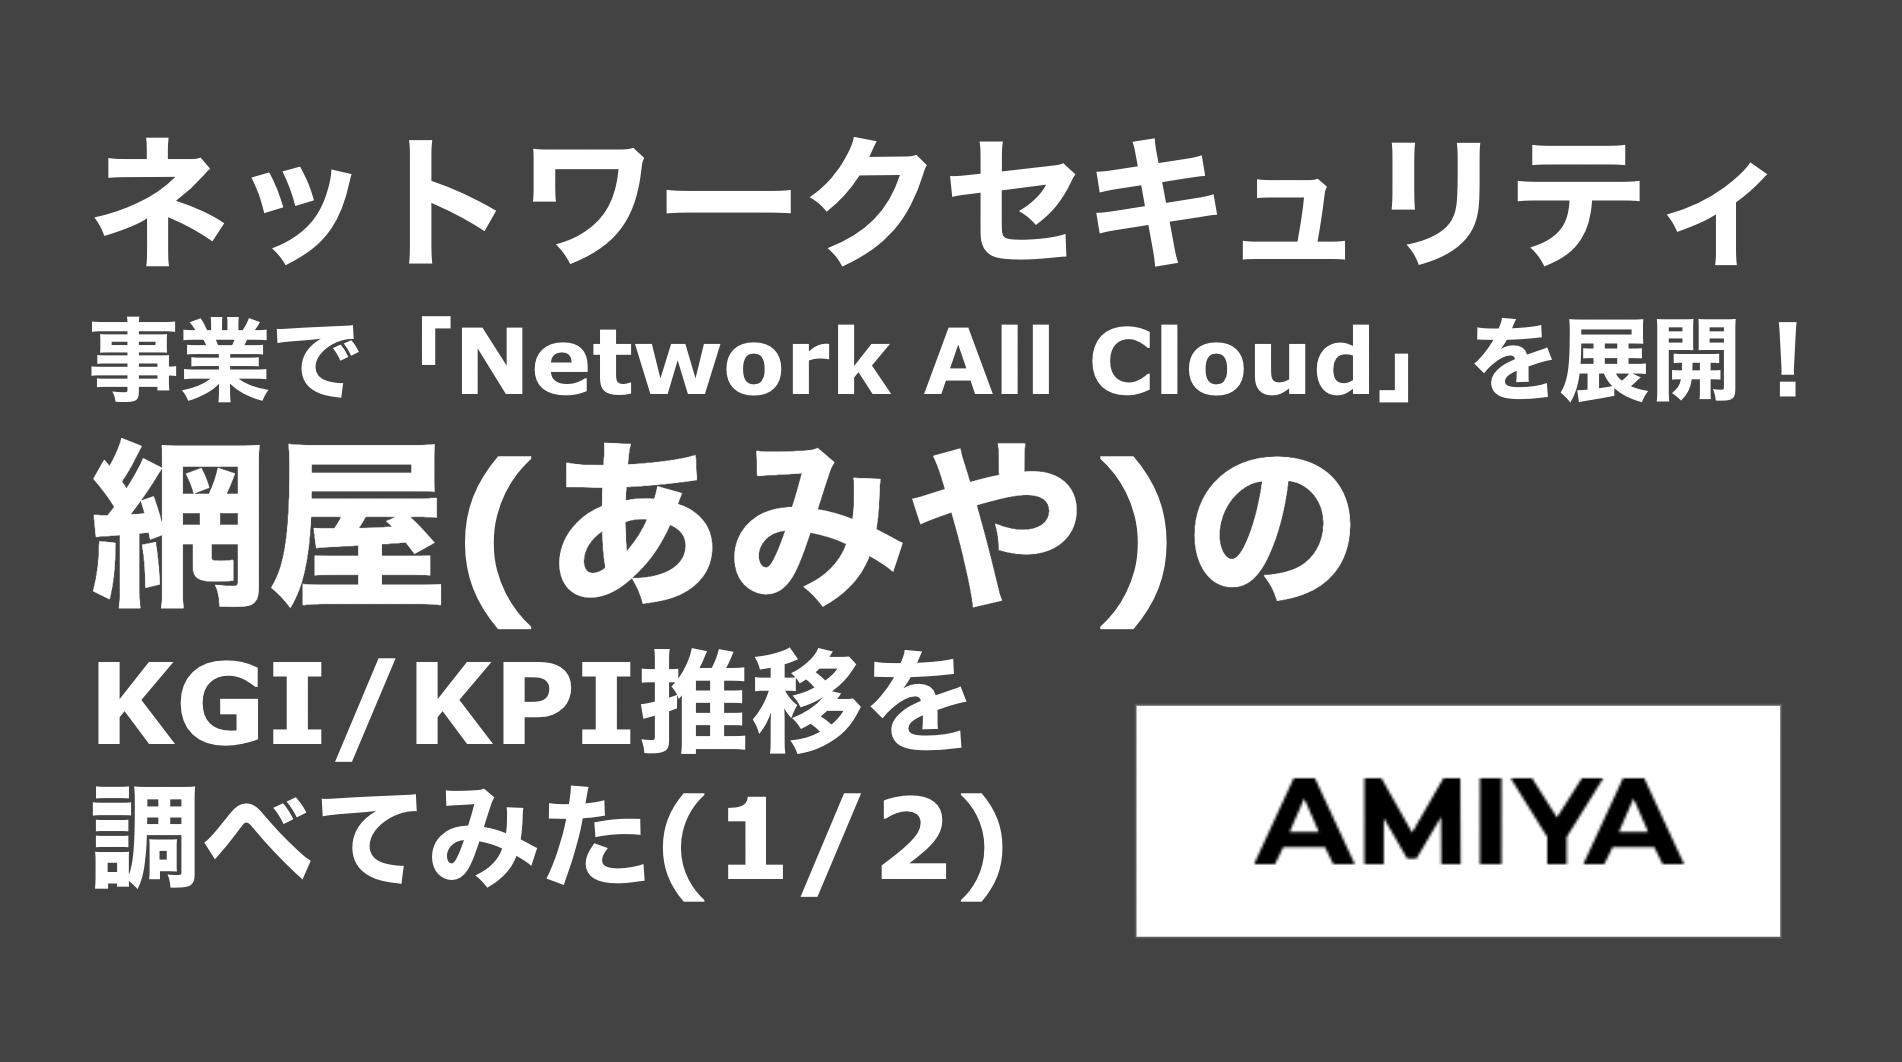 saaslife_　ネットワークセキュリティ事業で「Network All Cloud」を展開！網屋(あみや)のKGI/KPI推移を調べてみた(1/2)